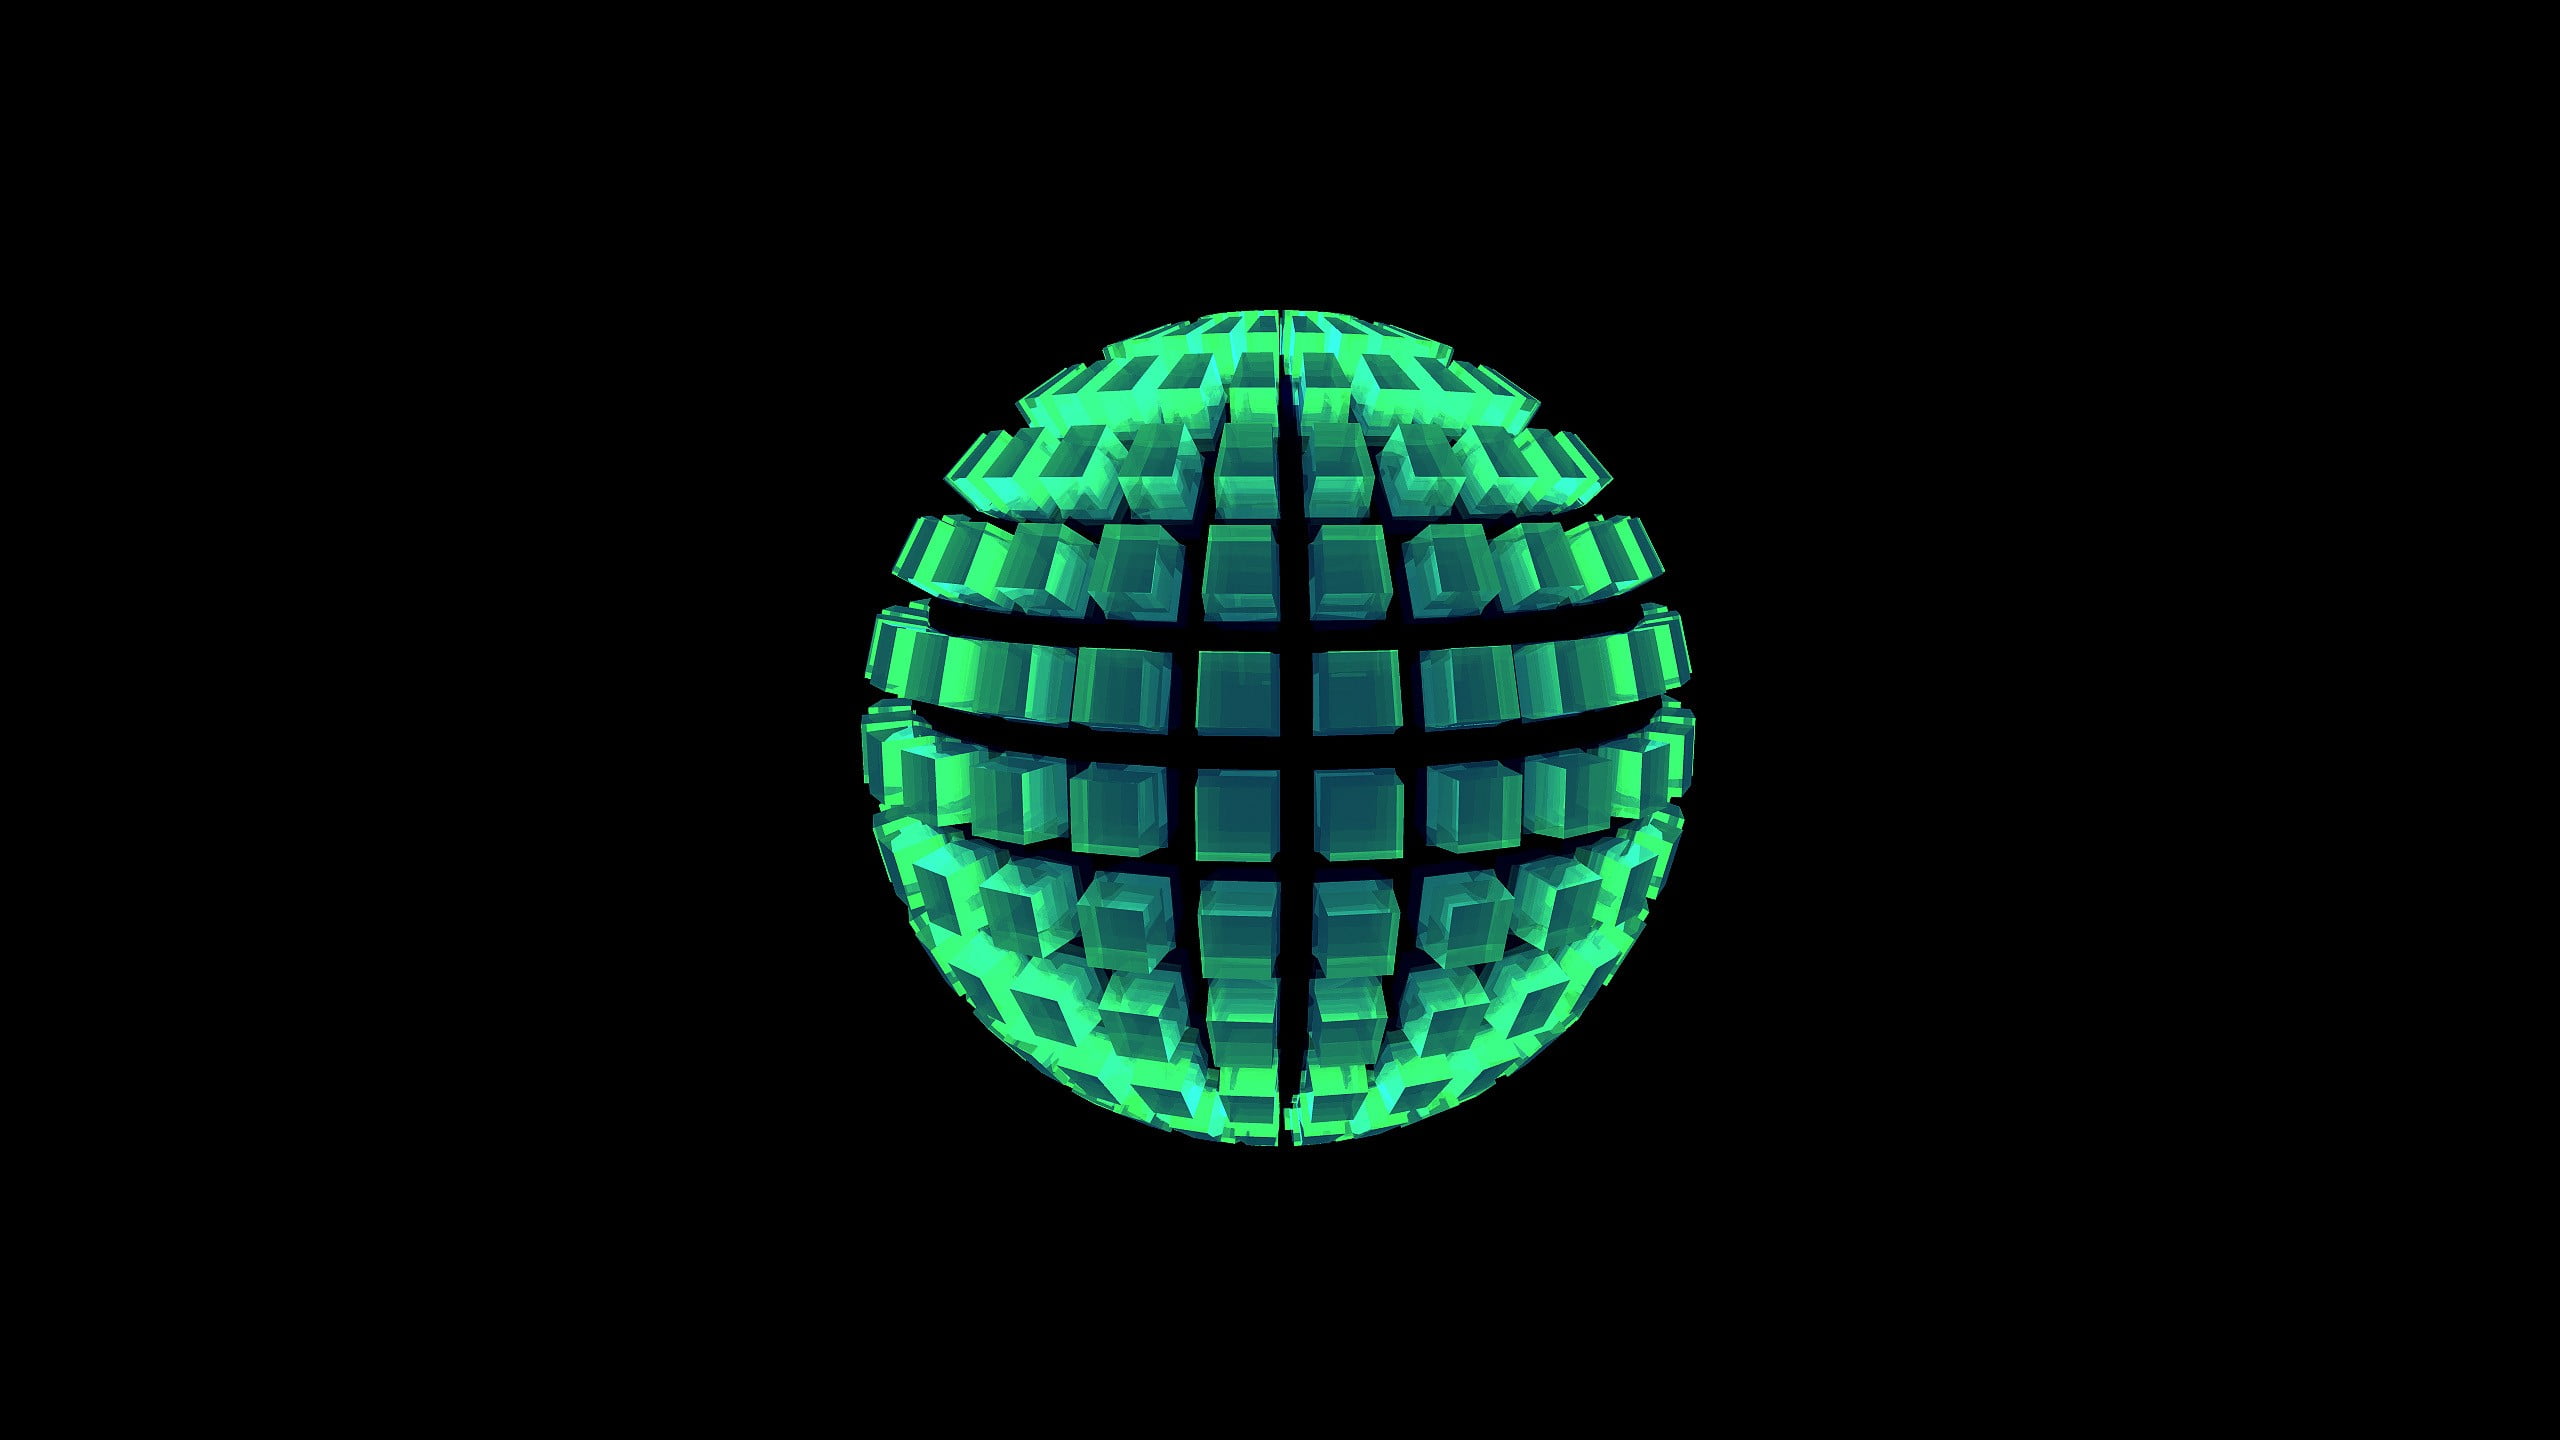 Green 3d Sphere Digital Art Sphere Hd Wallpaper Wallpaper Flare